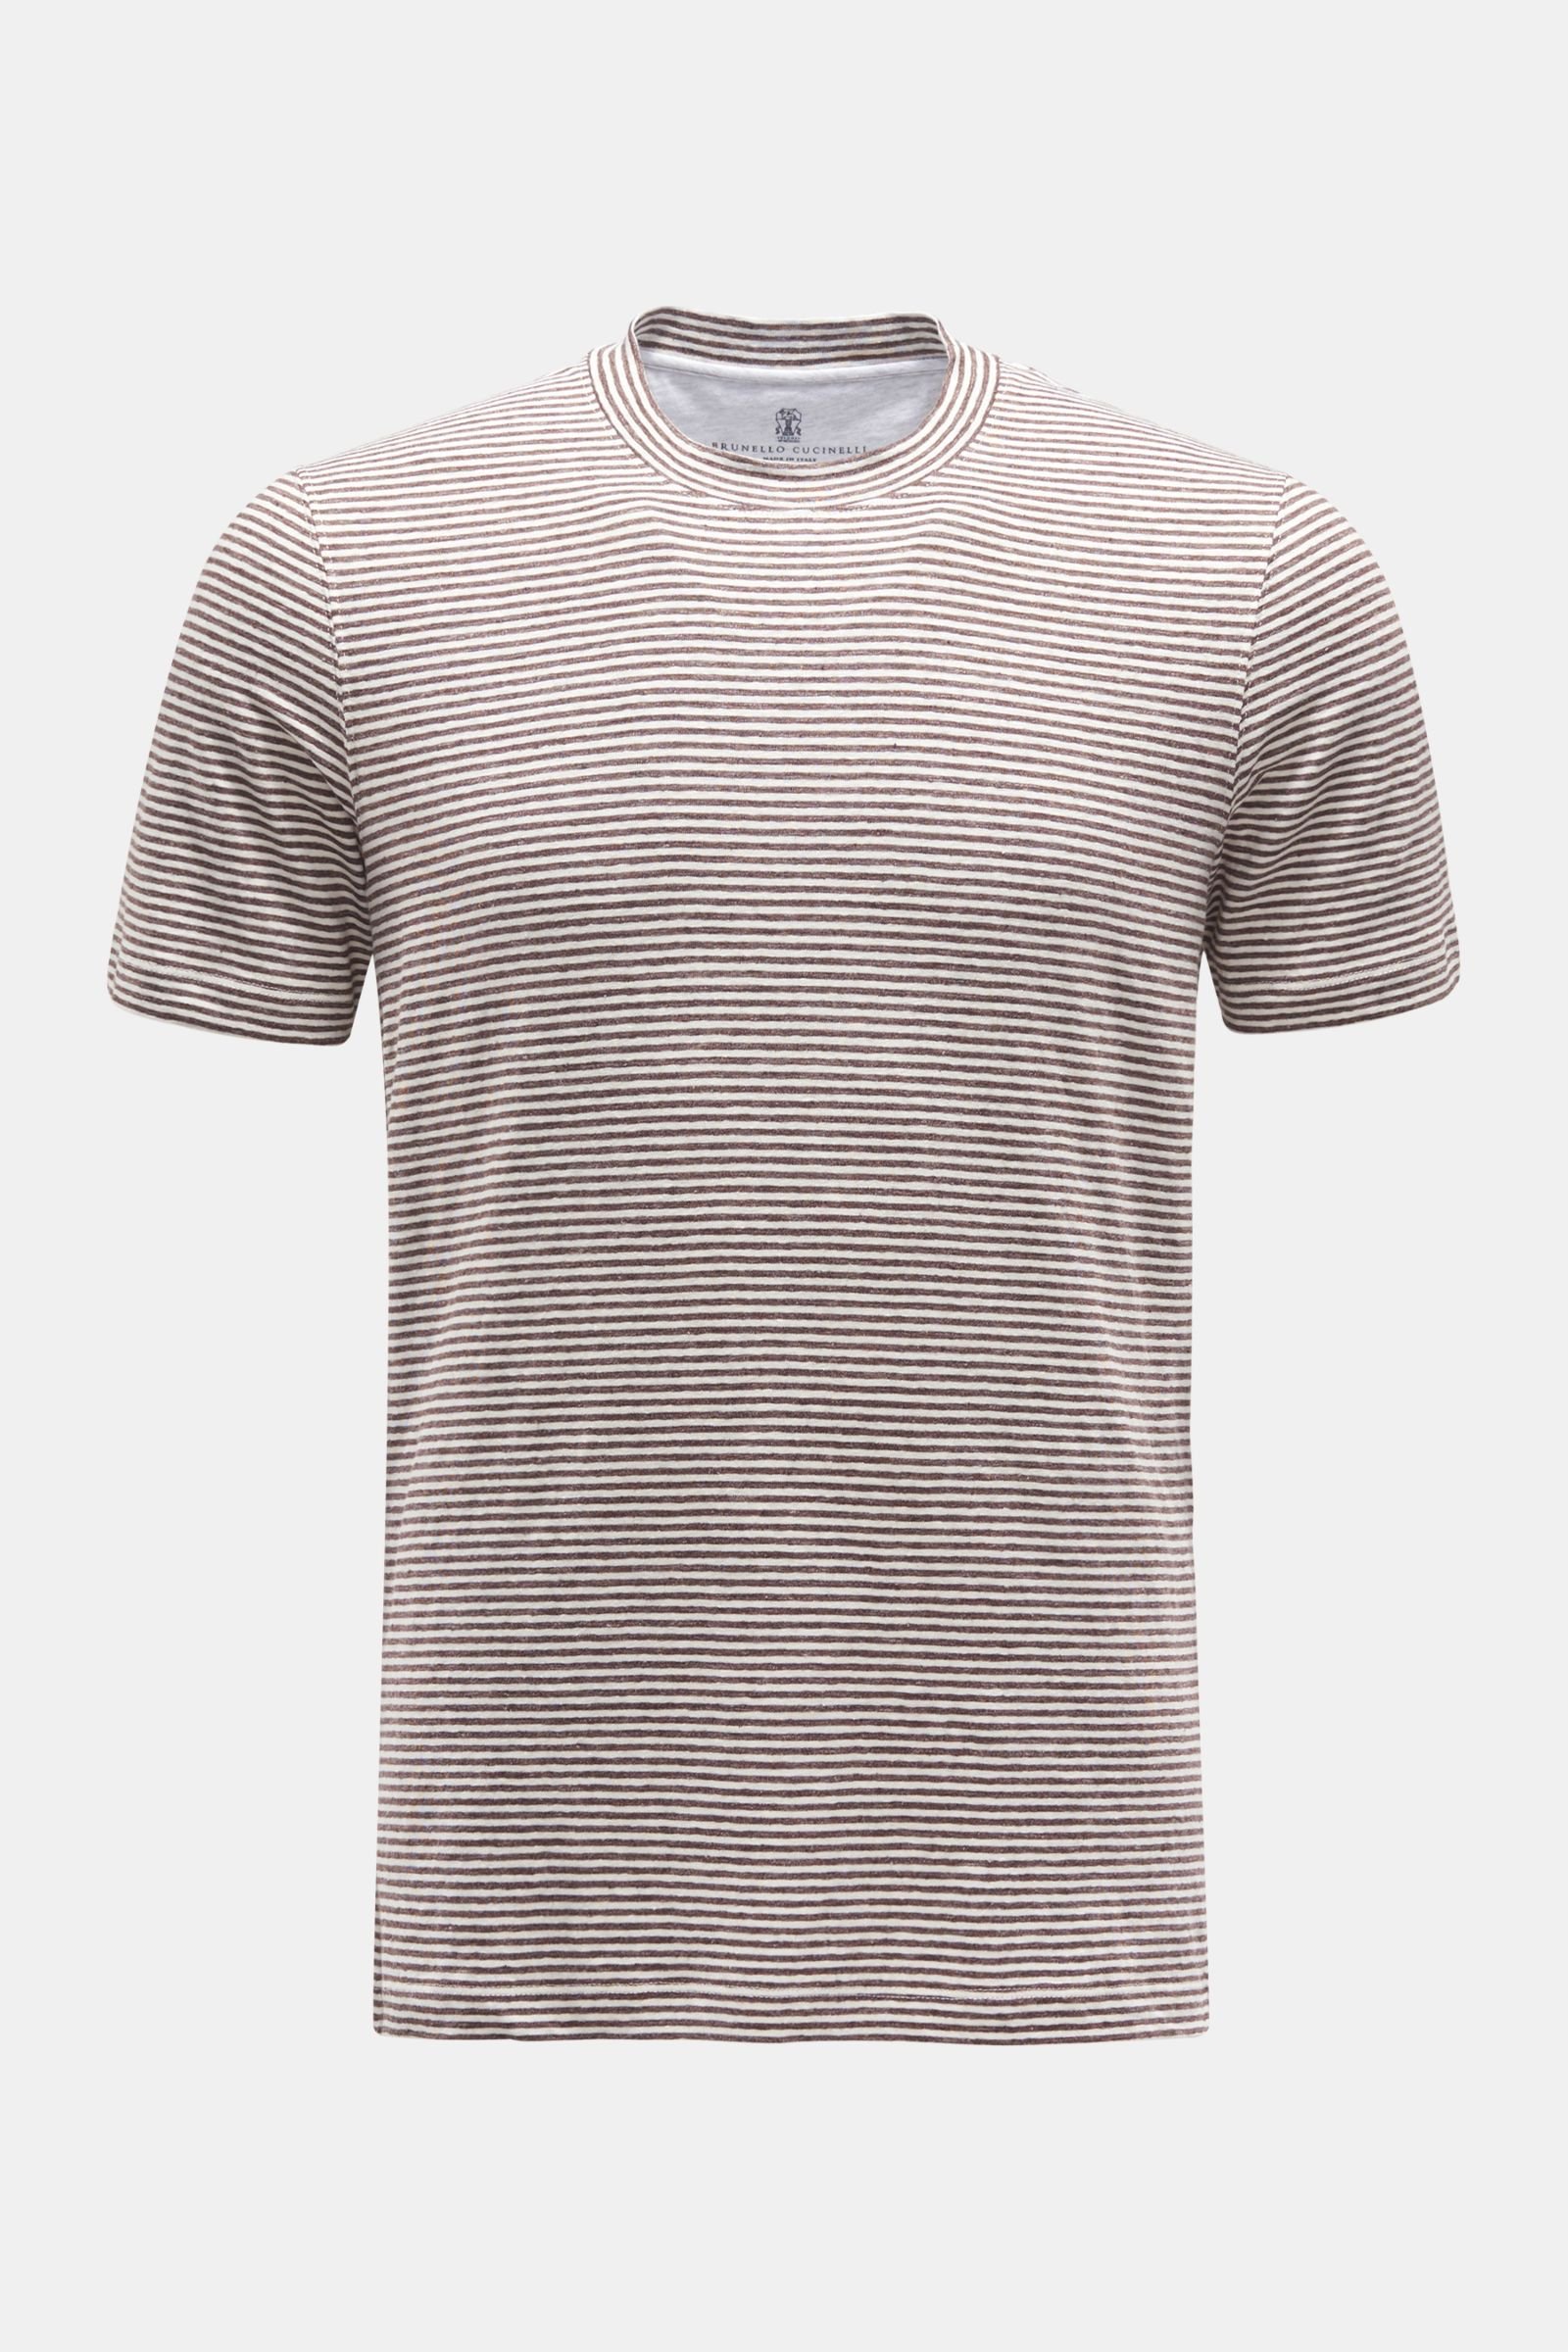 Leinen Rundhals-T-Shirt dunkelbraun/weiß gestreift